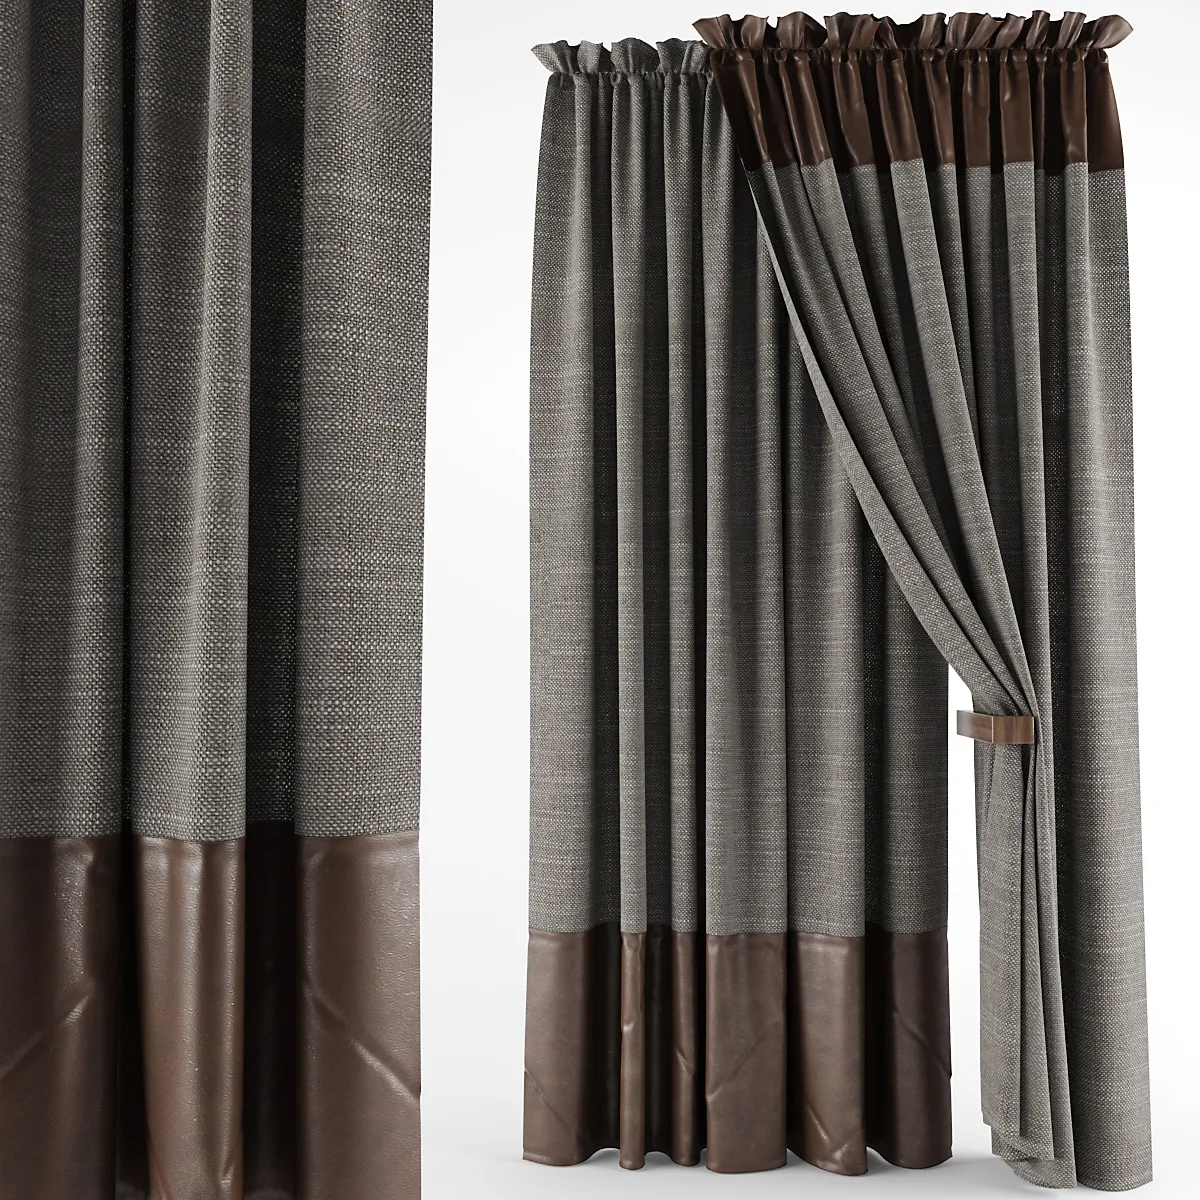 Curtains # 9 – 211713